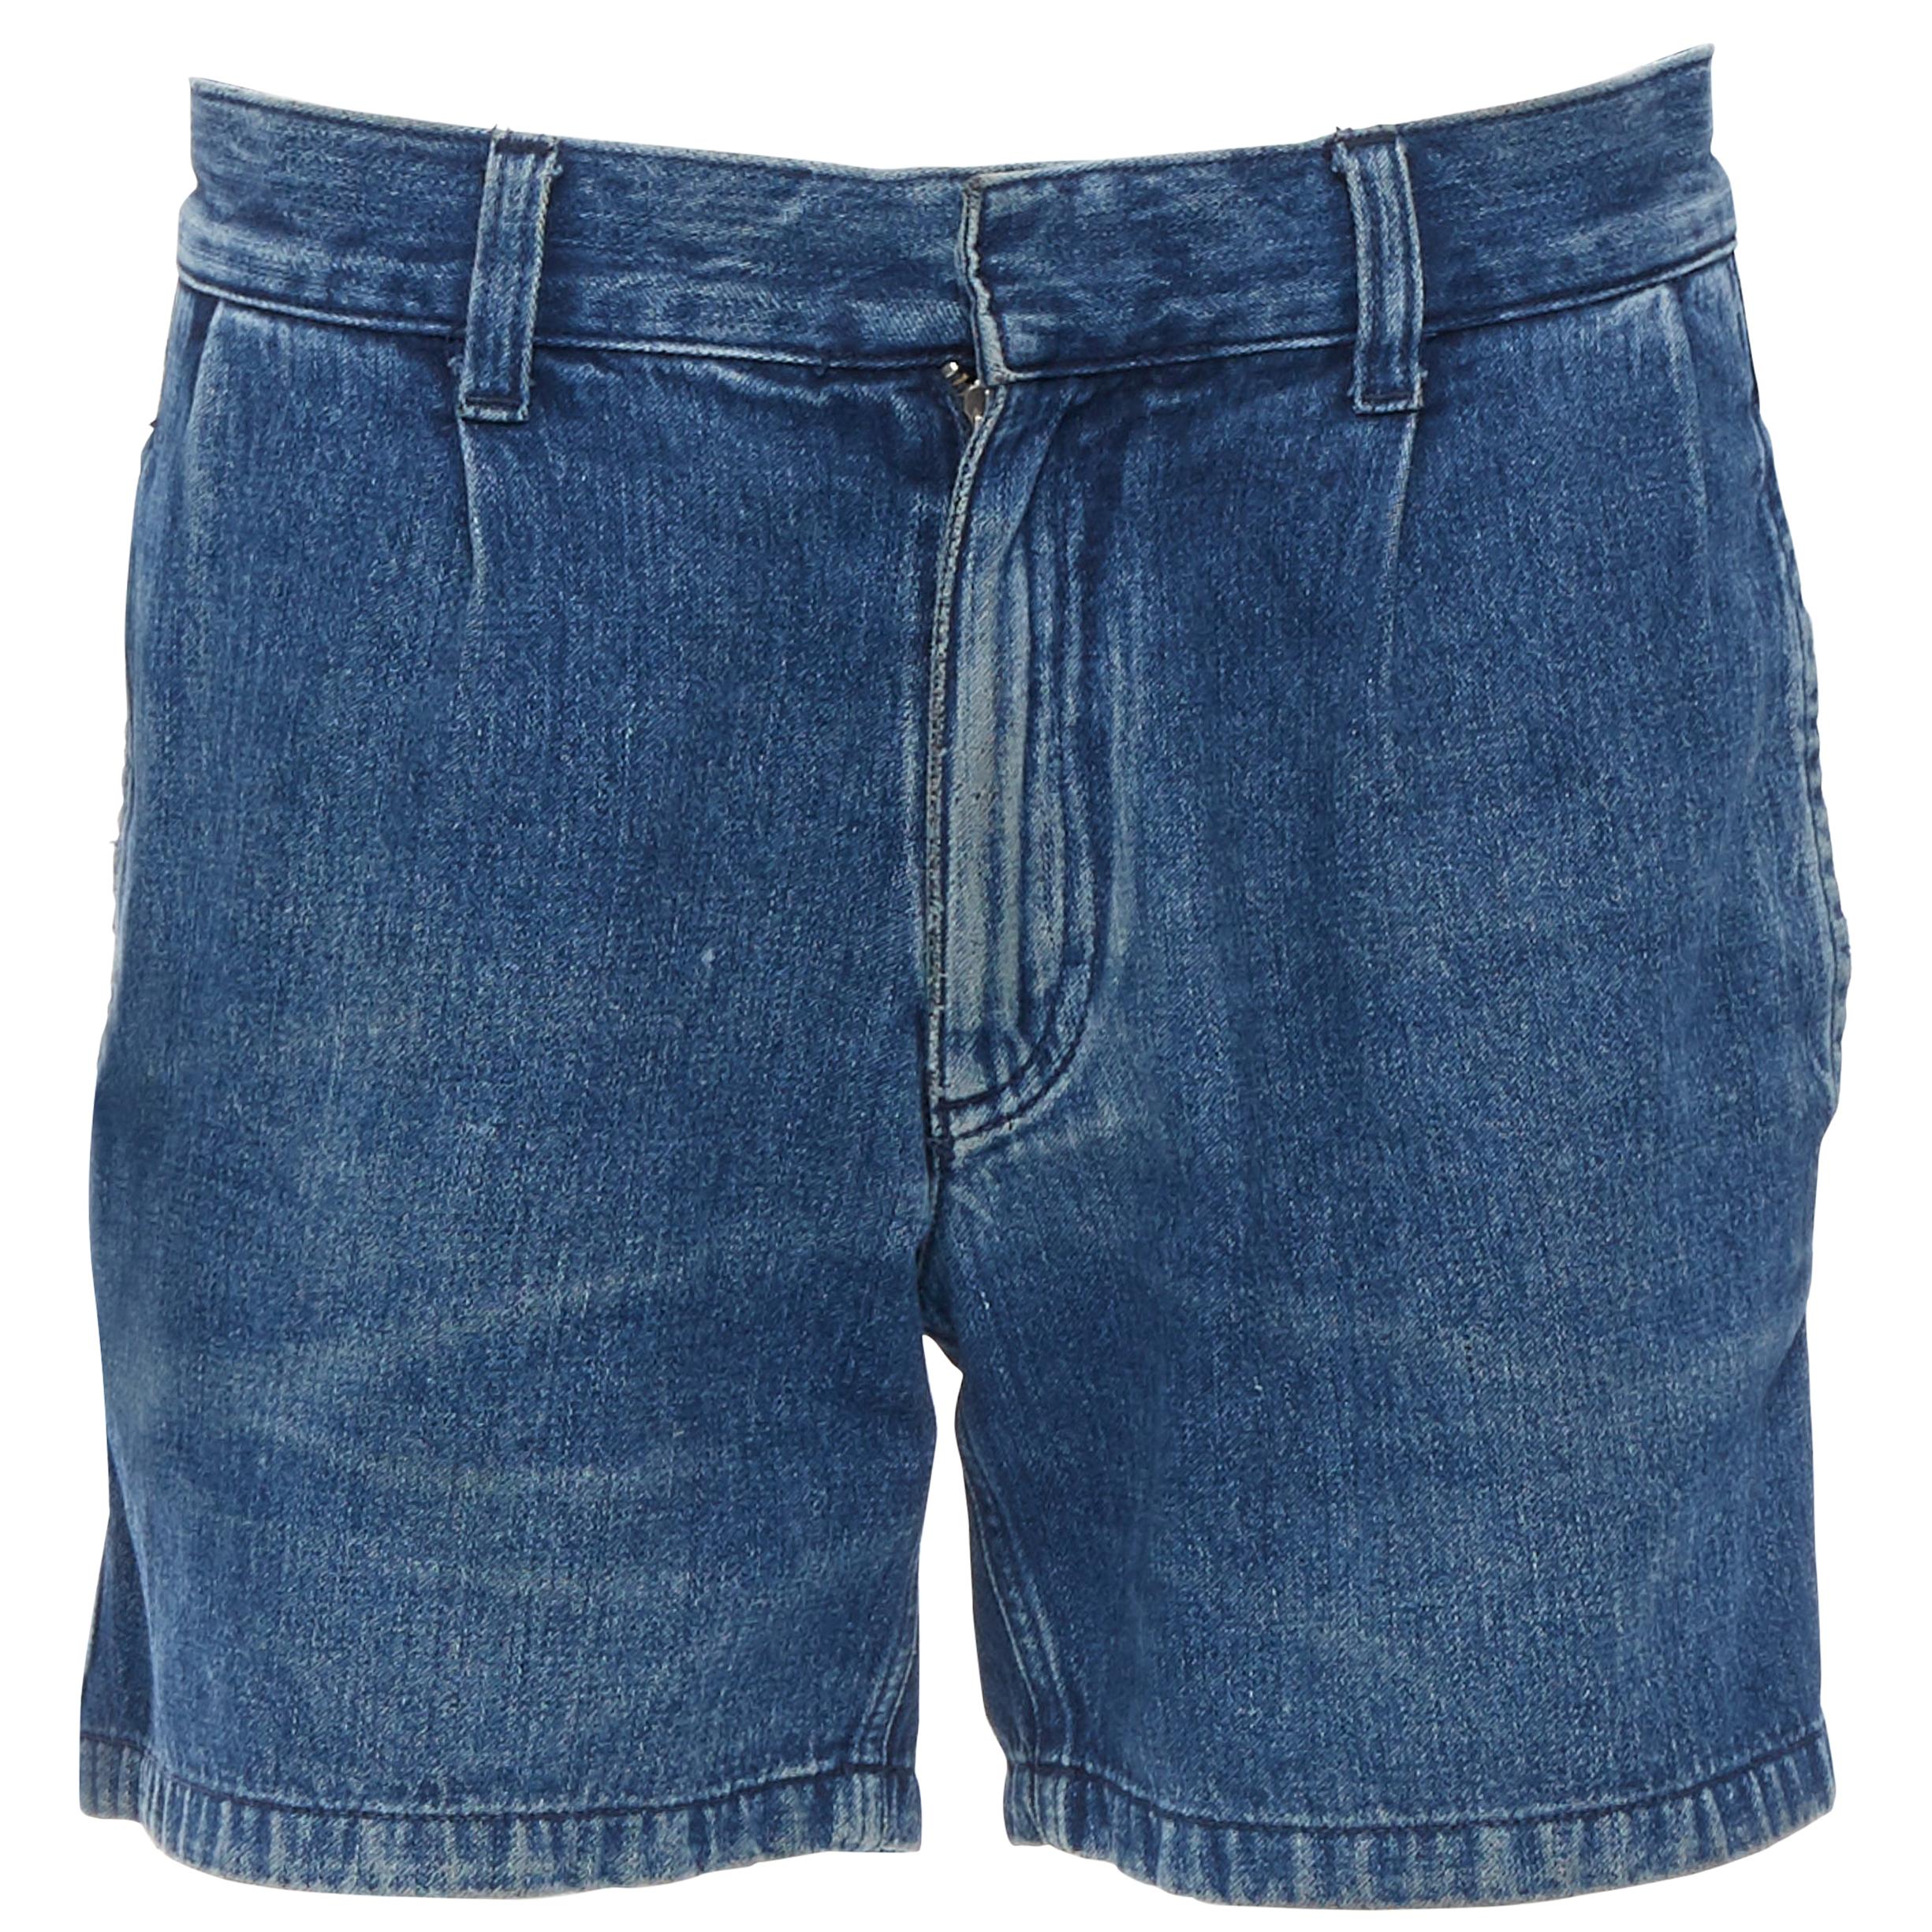 LANVIN ACNE blue whisker washed denim micro denim short shorts 28"